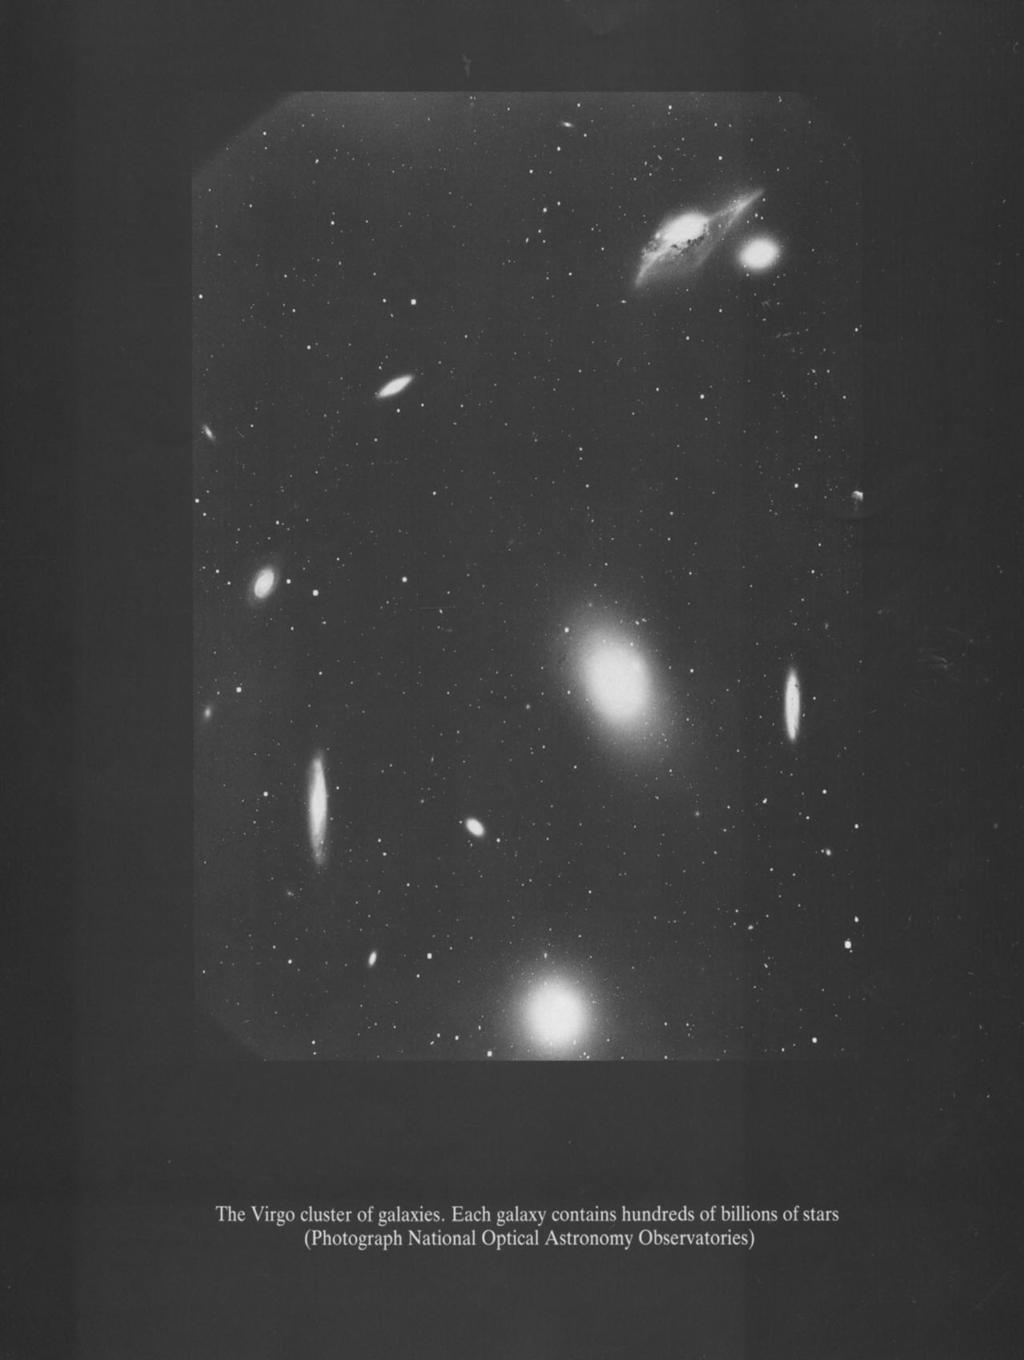 The Virgo cluster of galaxies.